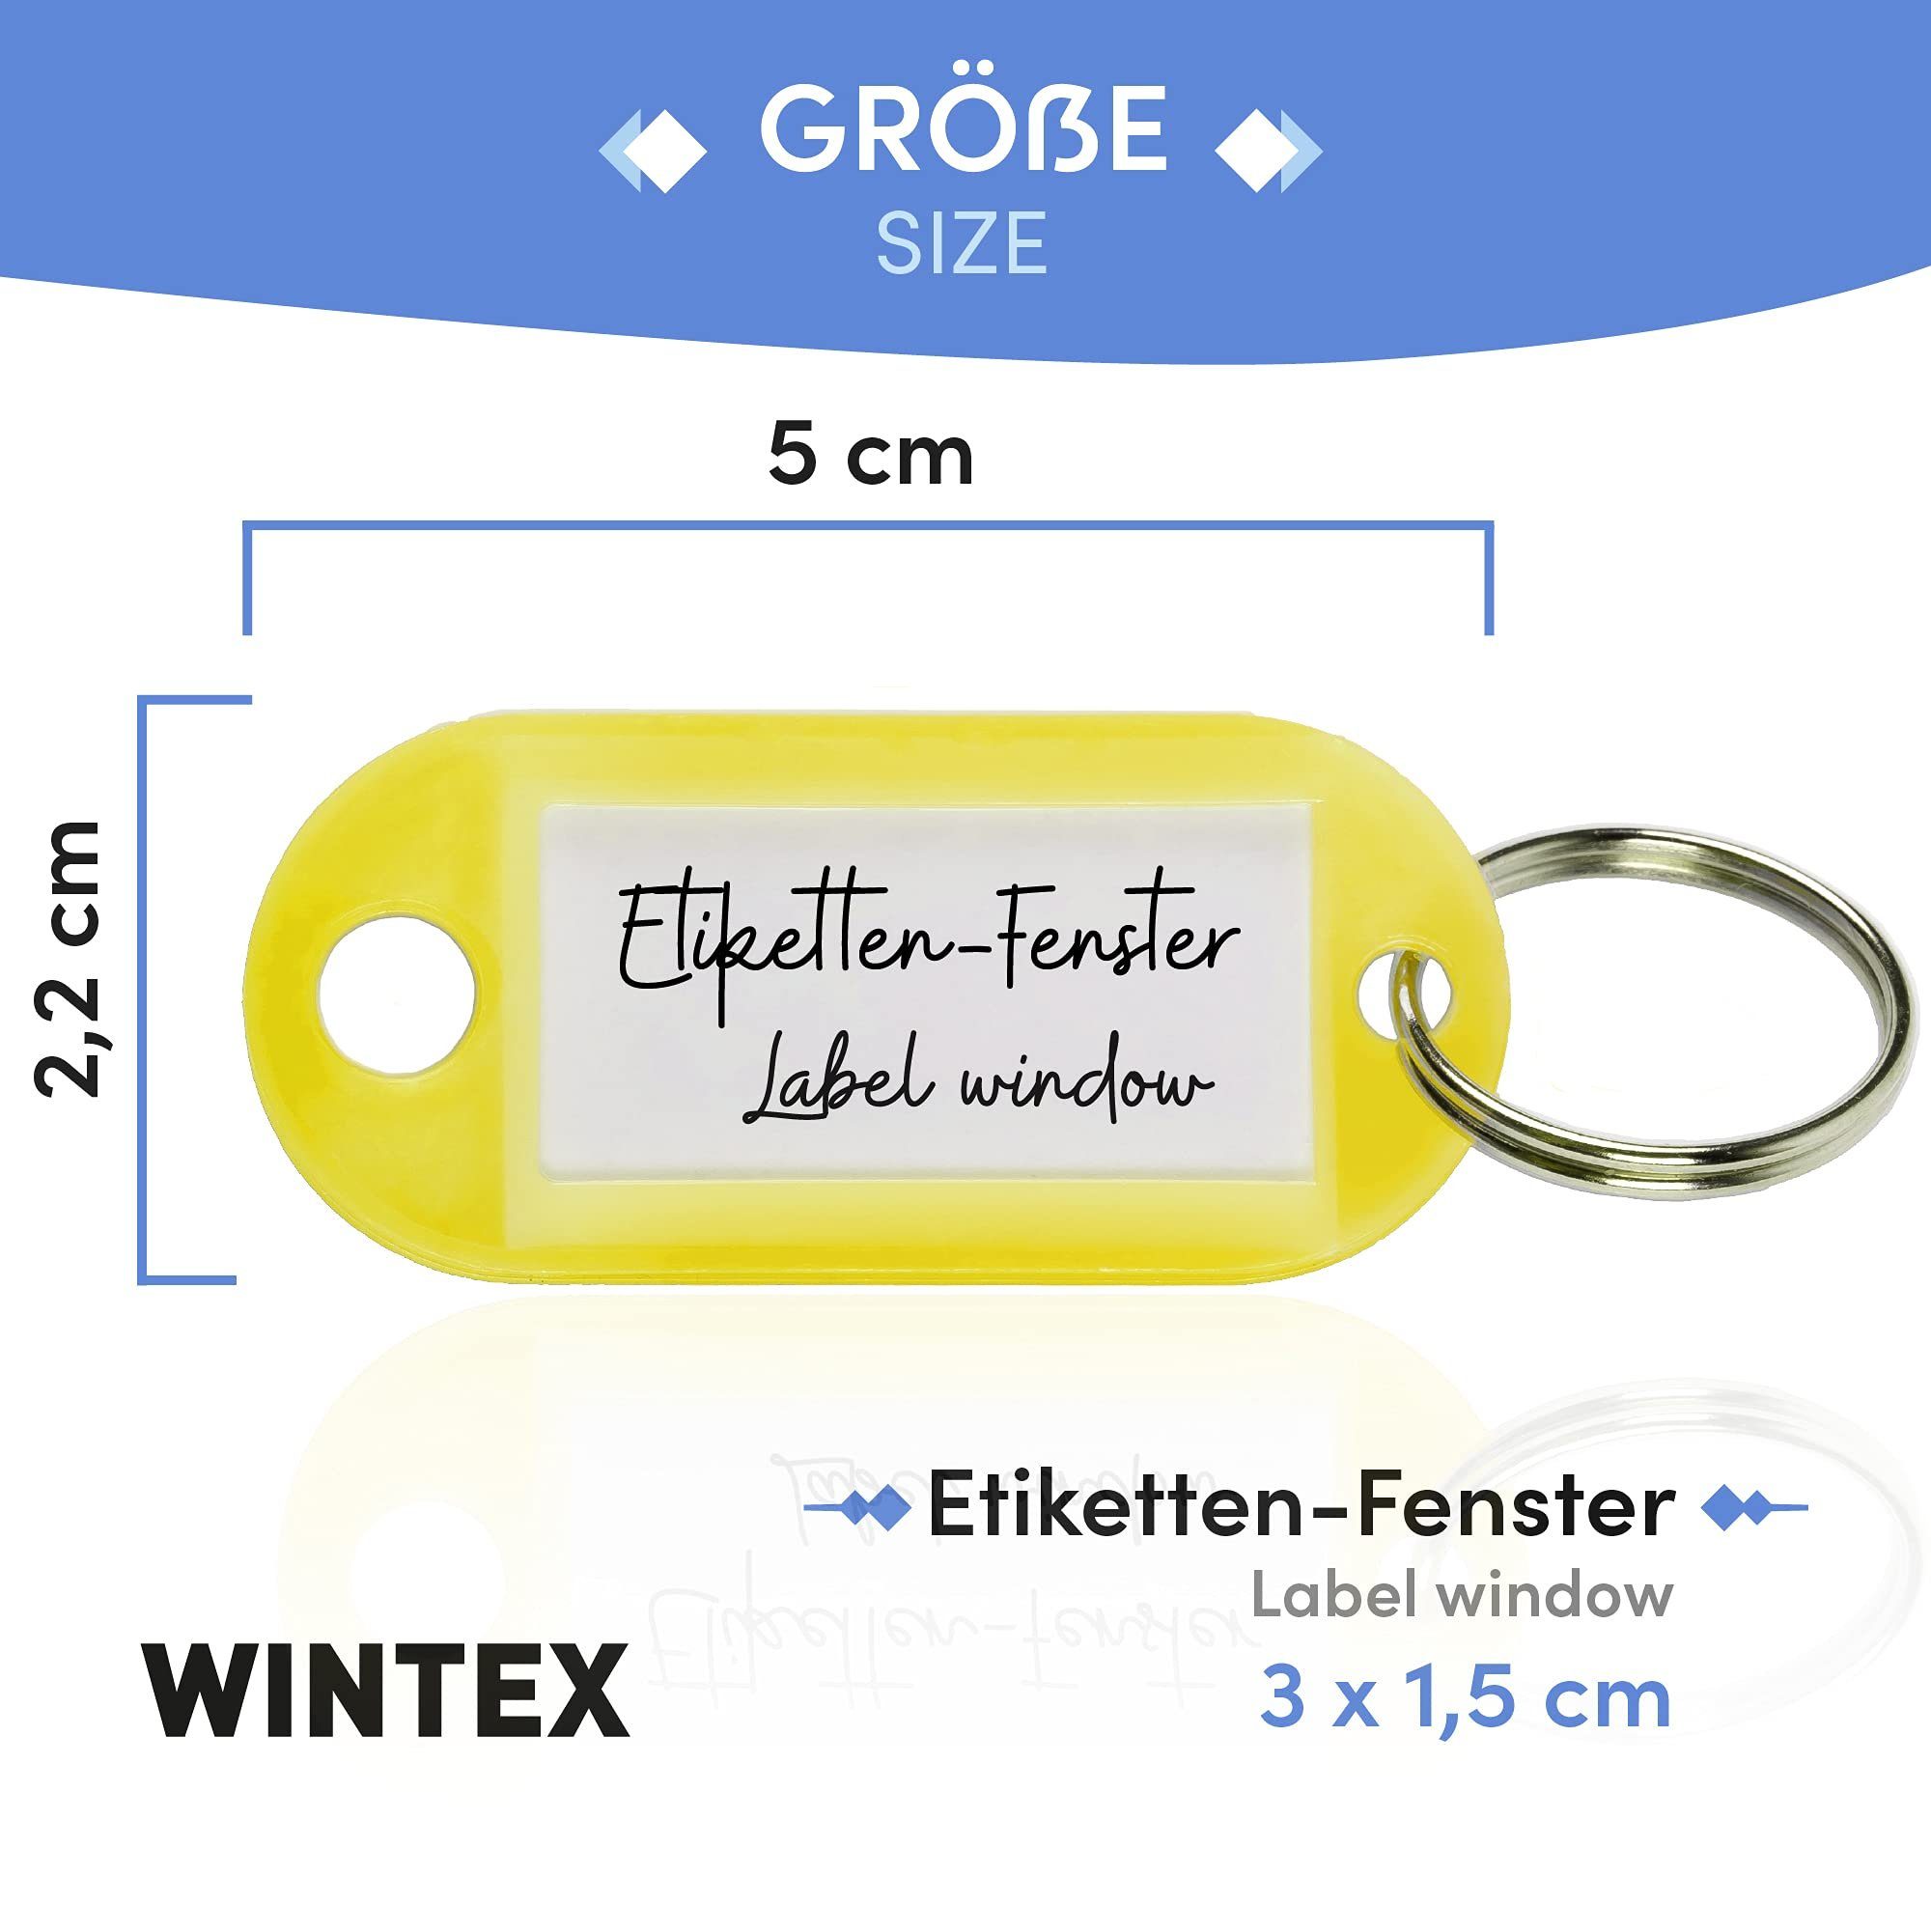 WINTEX Anhänger Schlüsselanhänger Strapazierfähige - Schlüsselanhänger Wintex 100x - Gelb